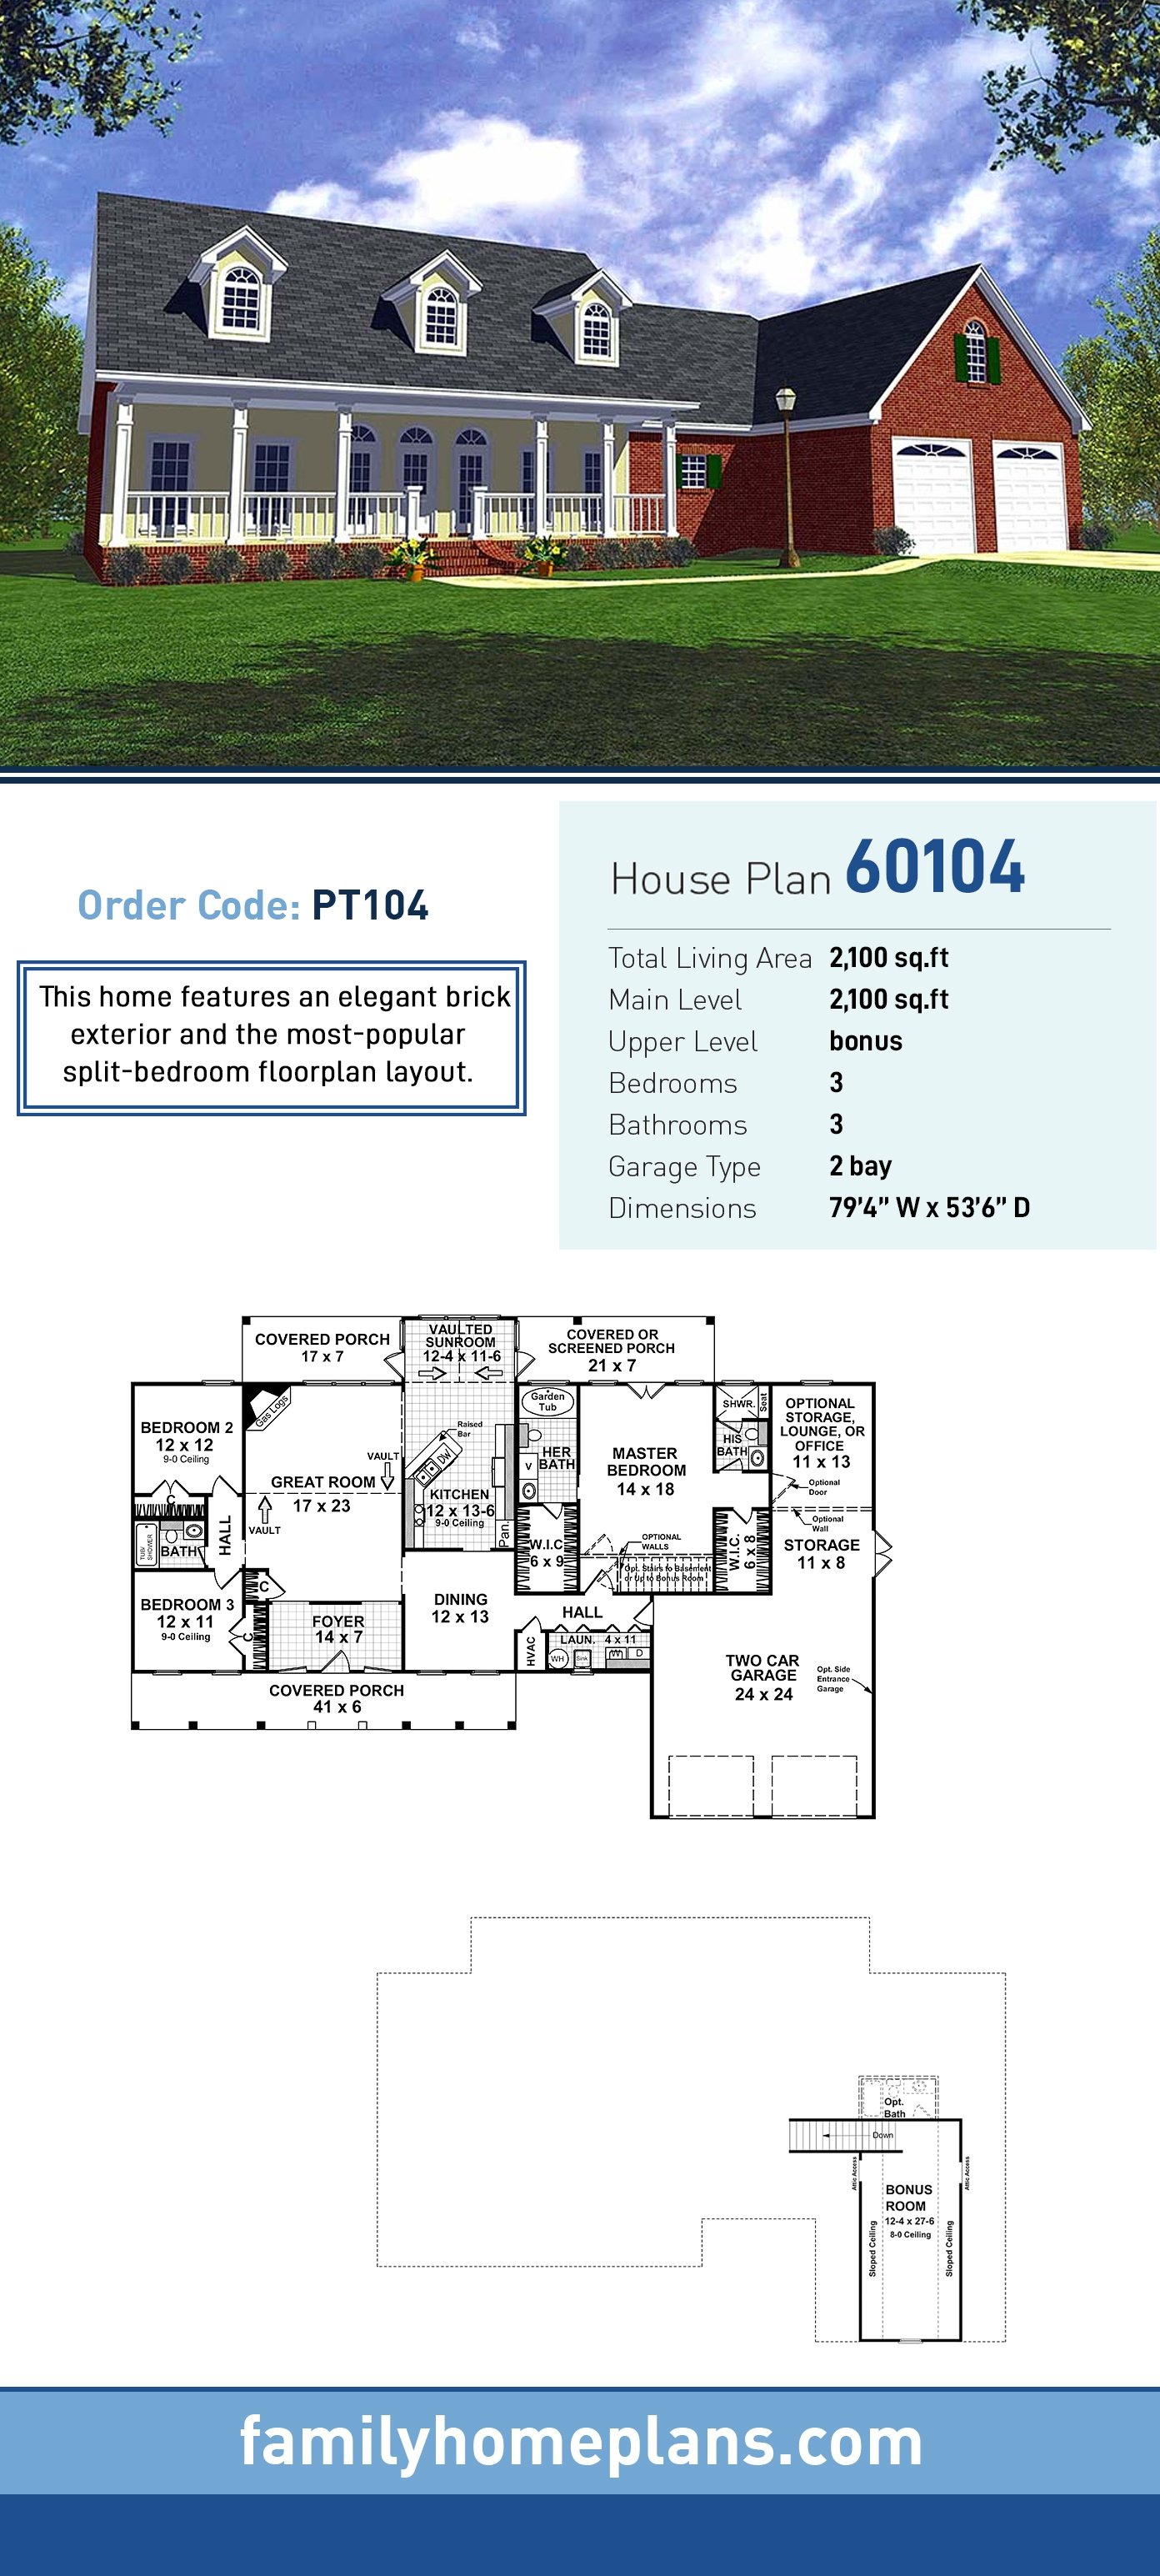 House Plan 60104